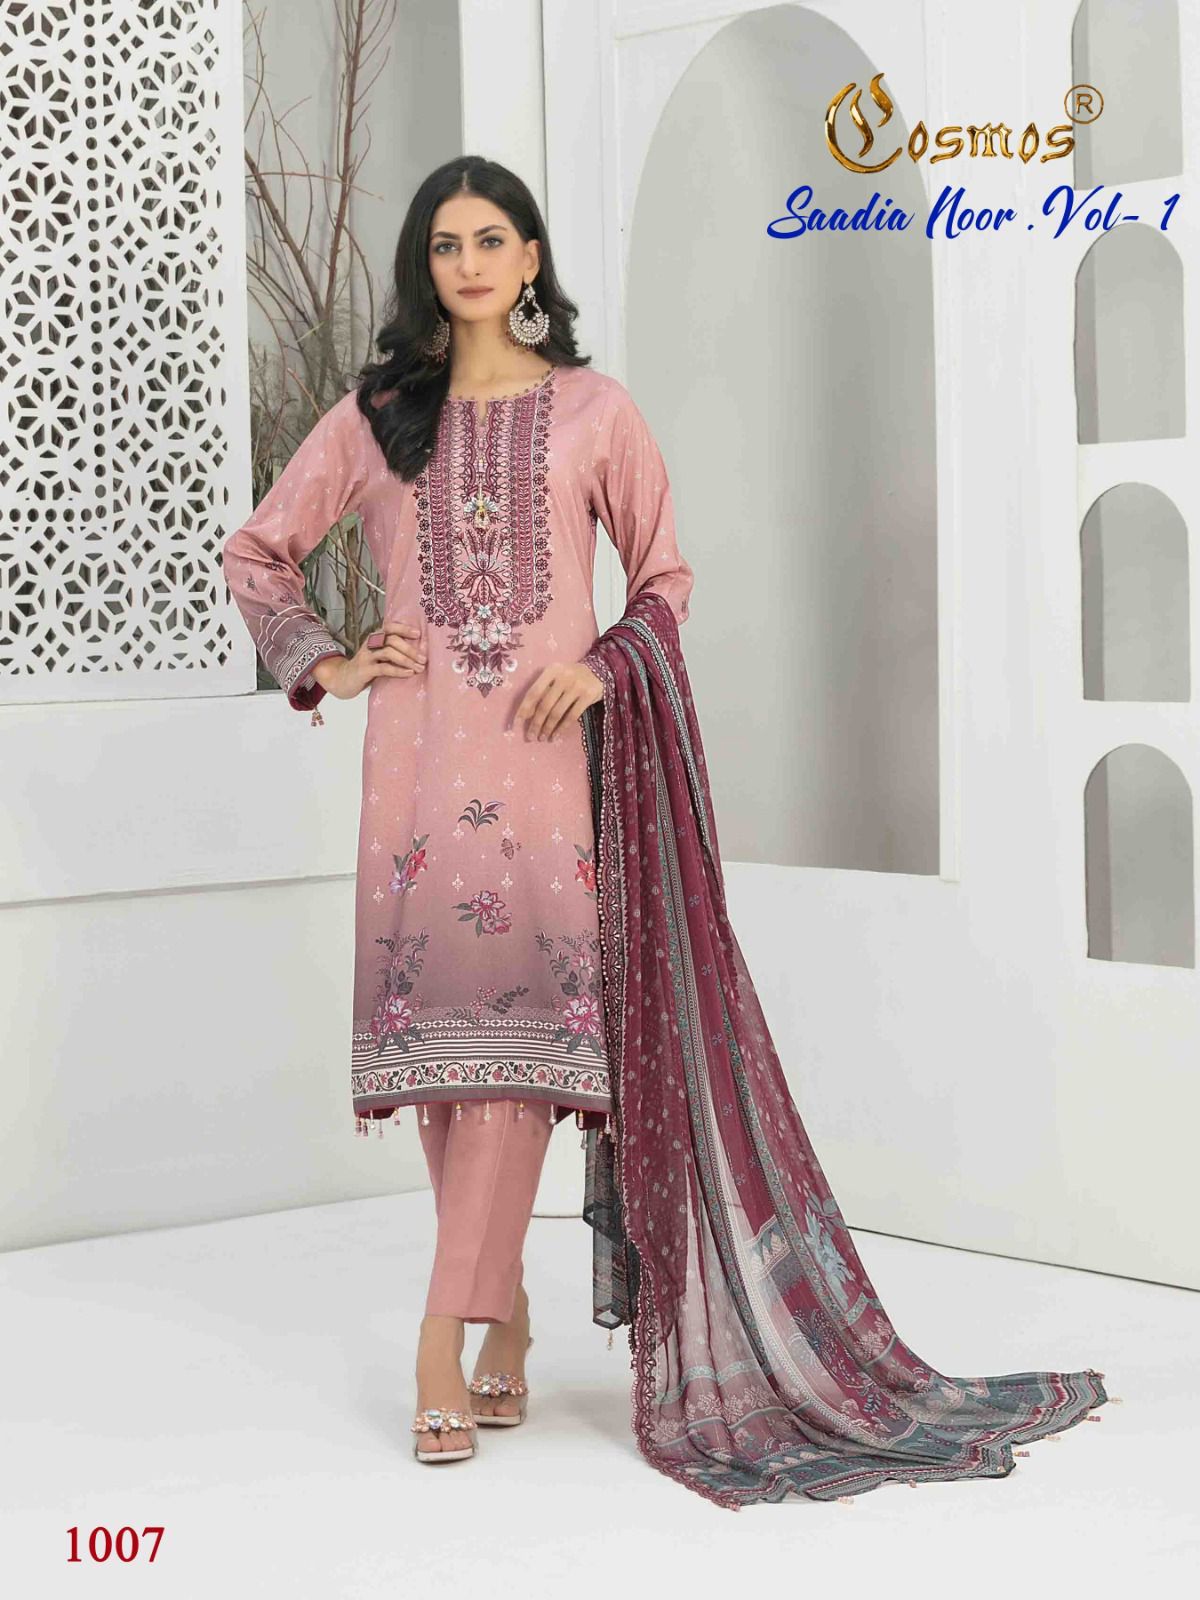 Cosmos Fashion Saadia Noor Vol 1 Pakistani Suits Catalog Lowest Price